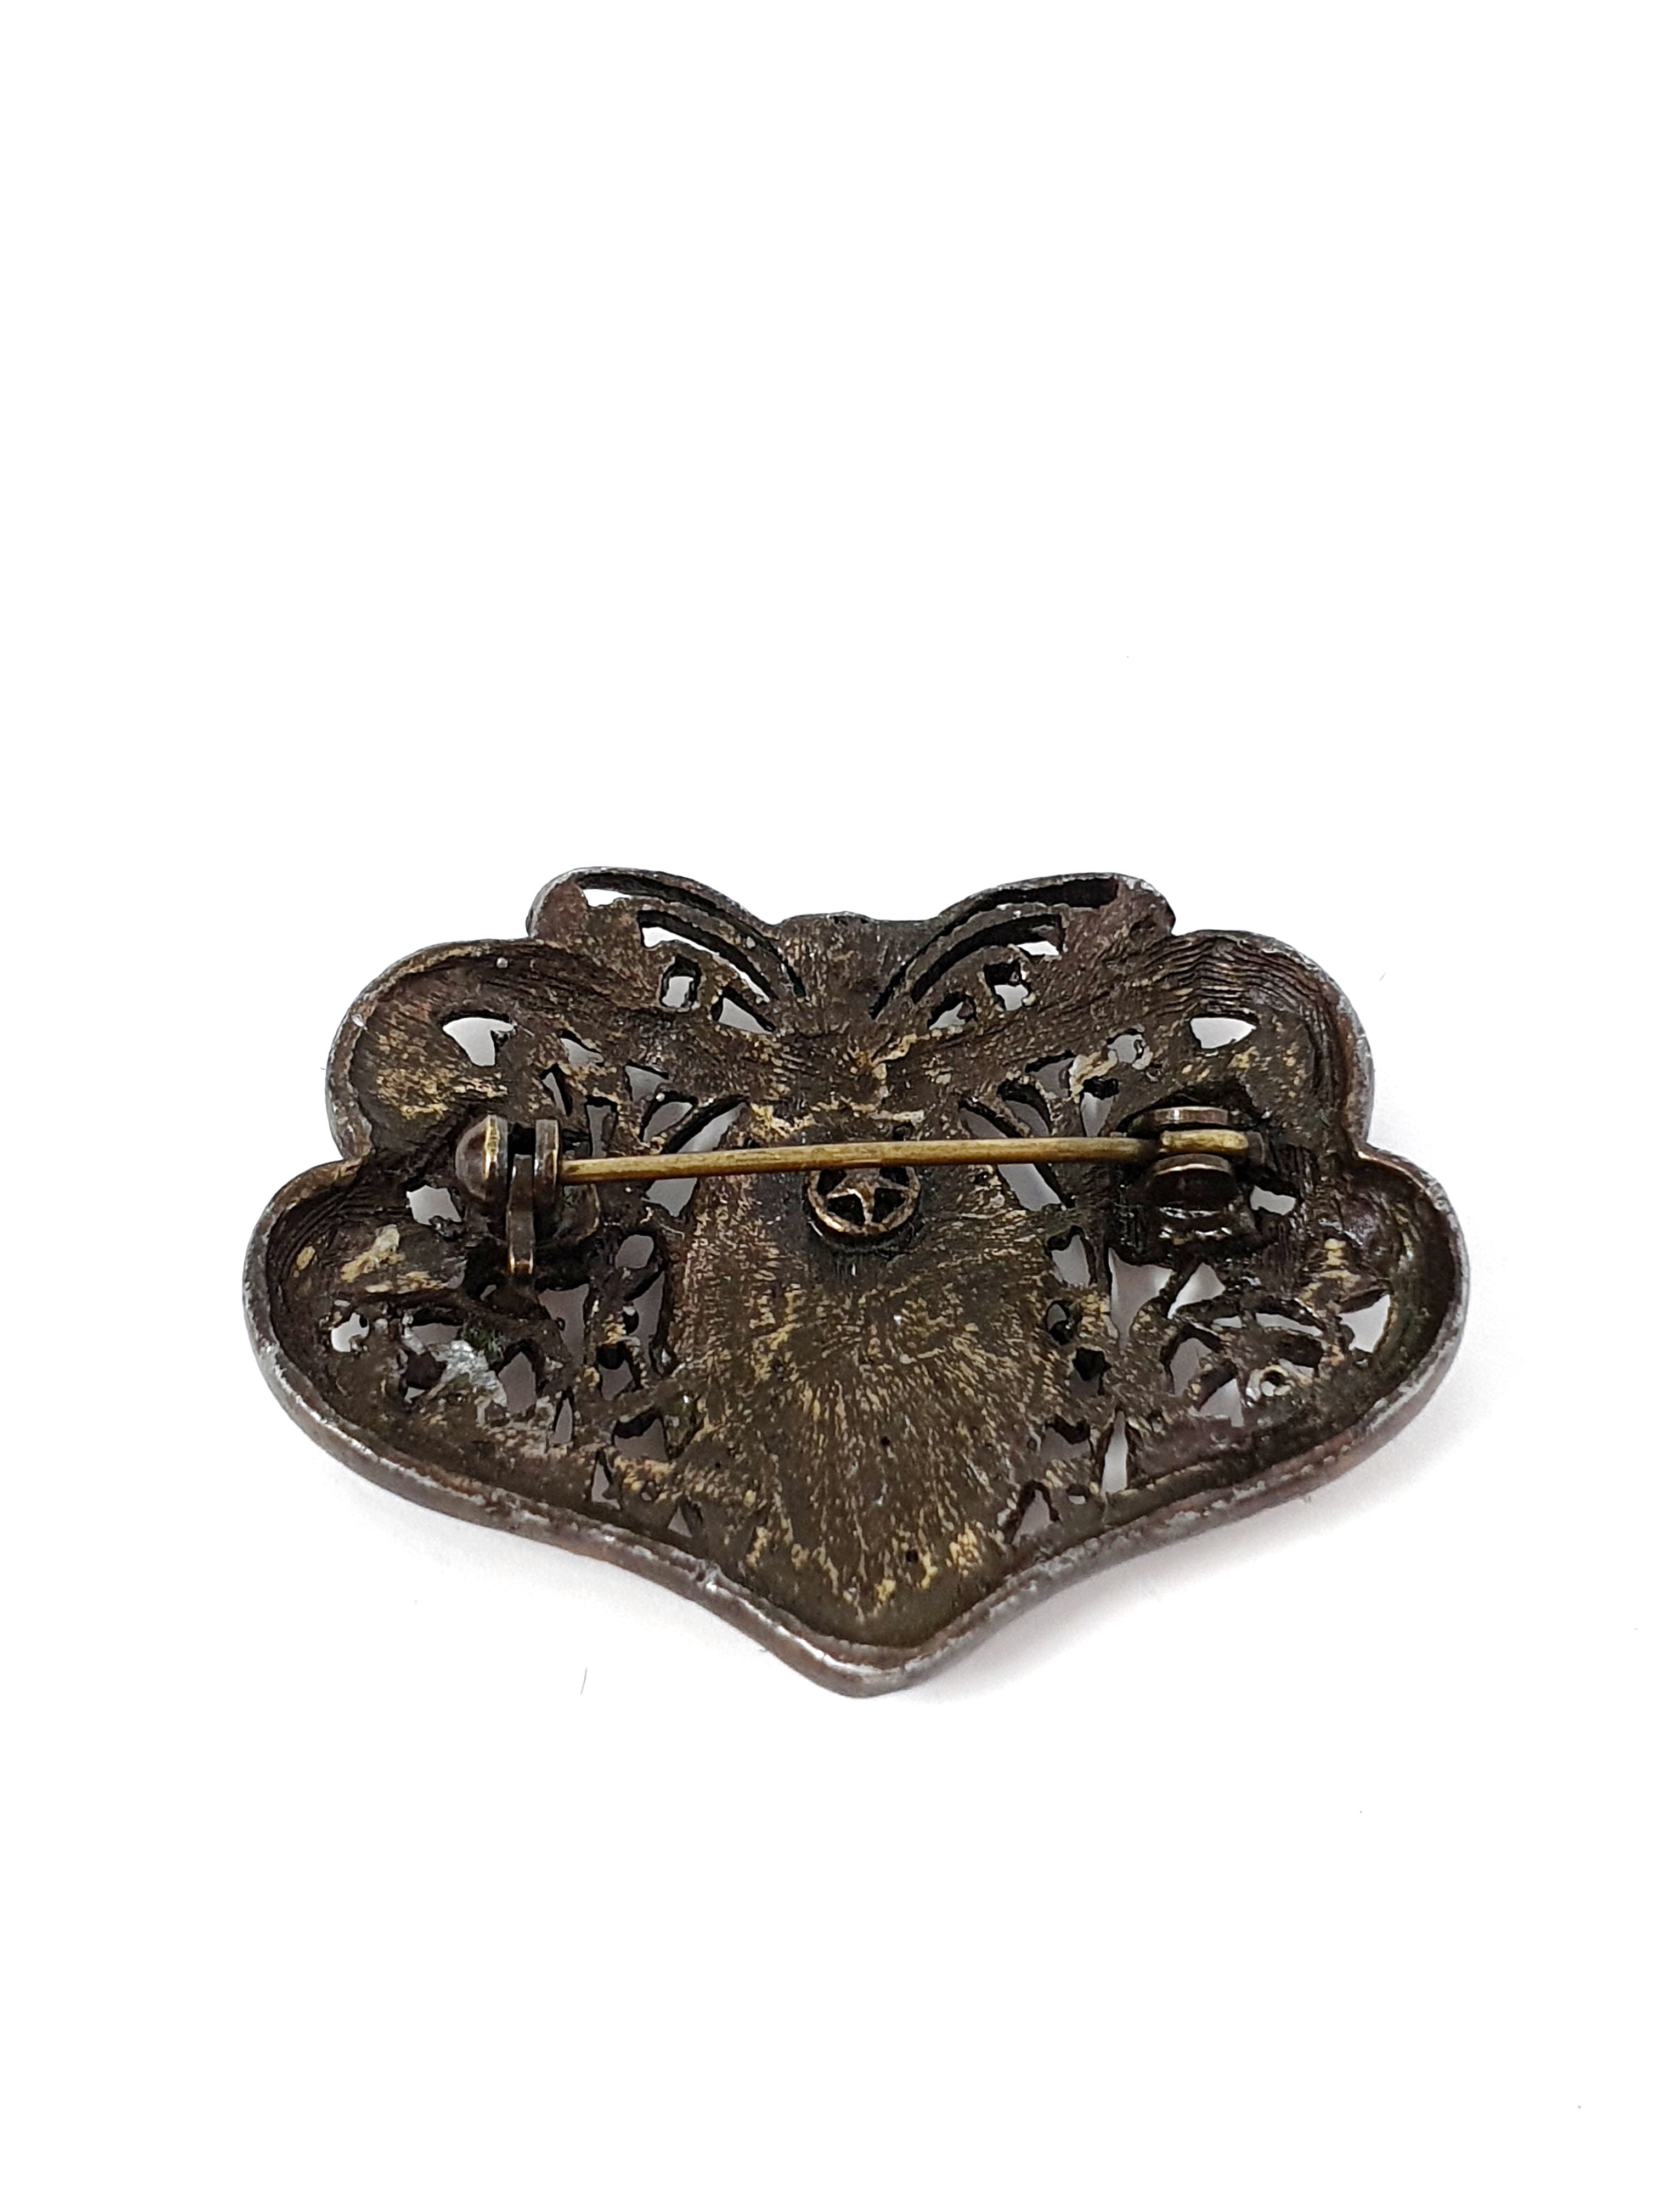 (Possible) H.D. Merritt & Co vintage brooch